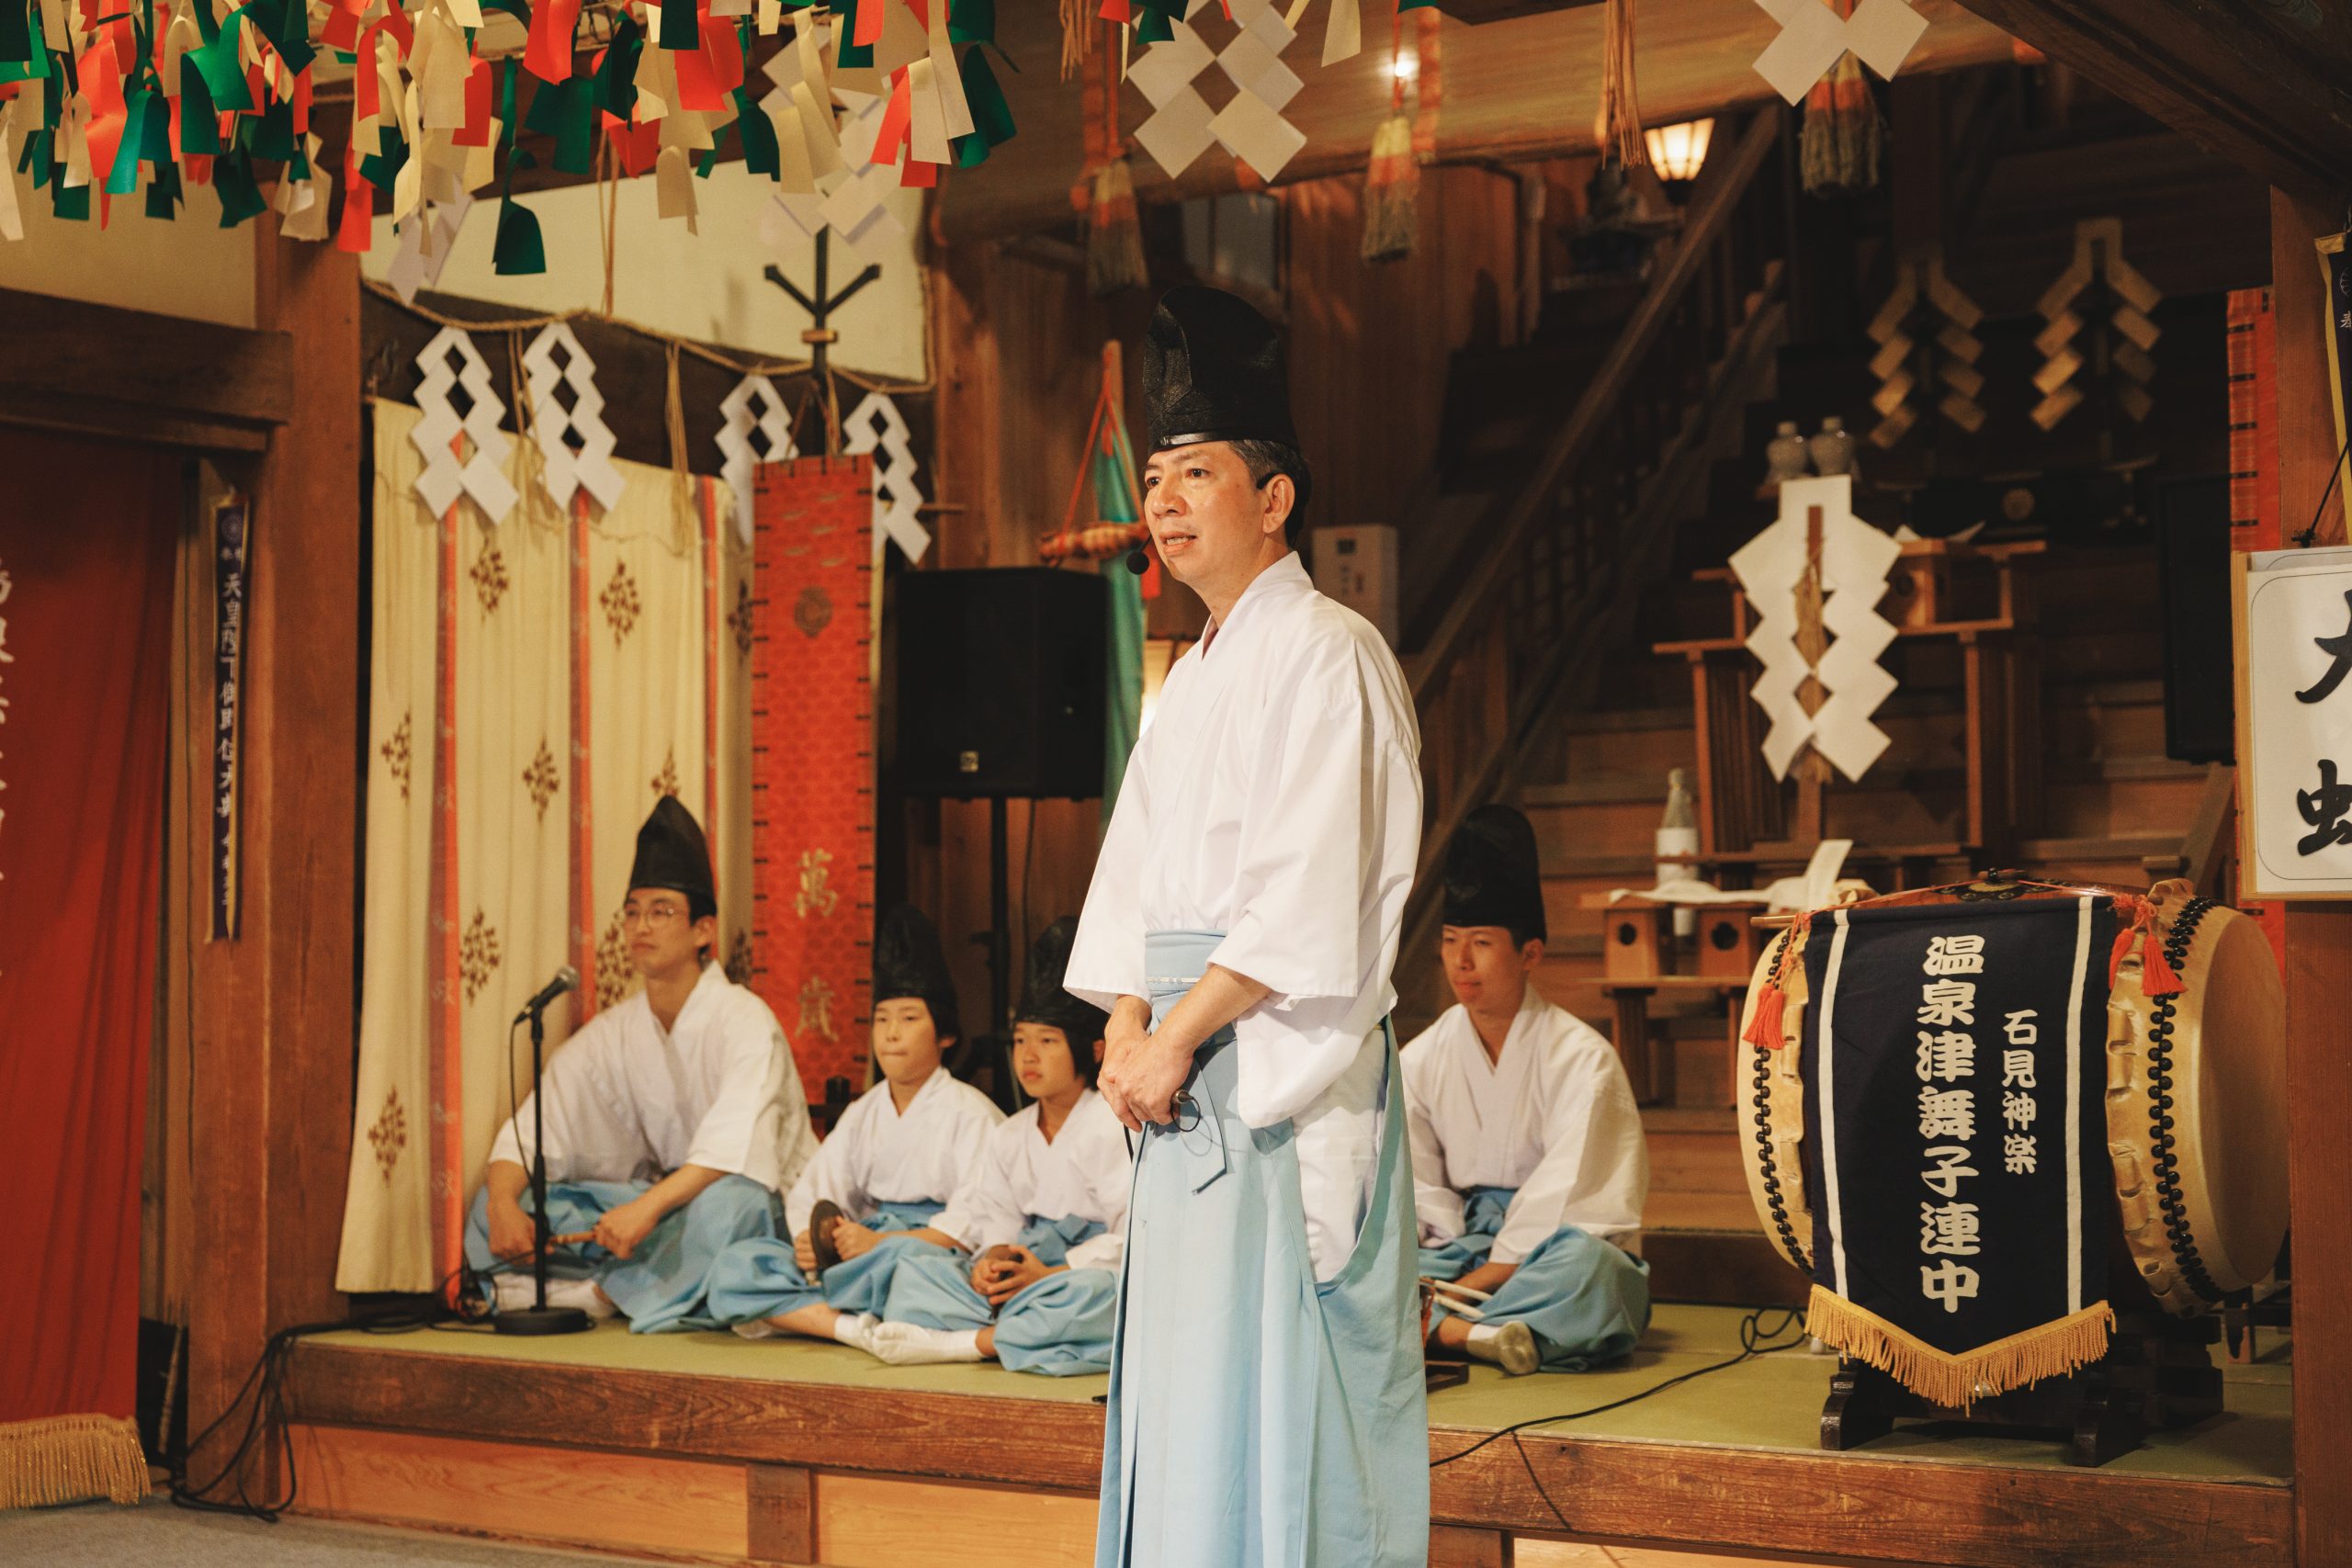 Iwami Kagura dance performance